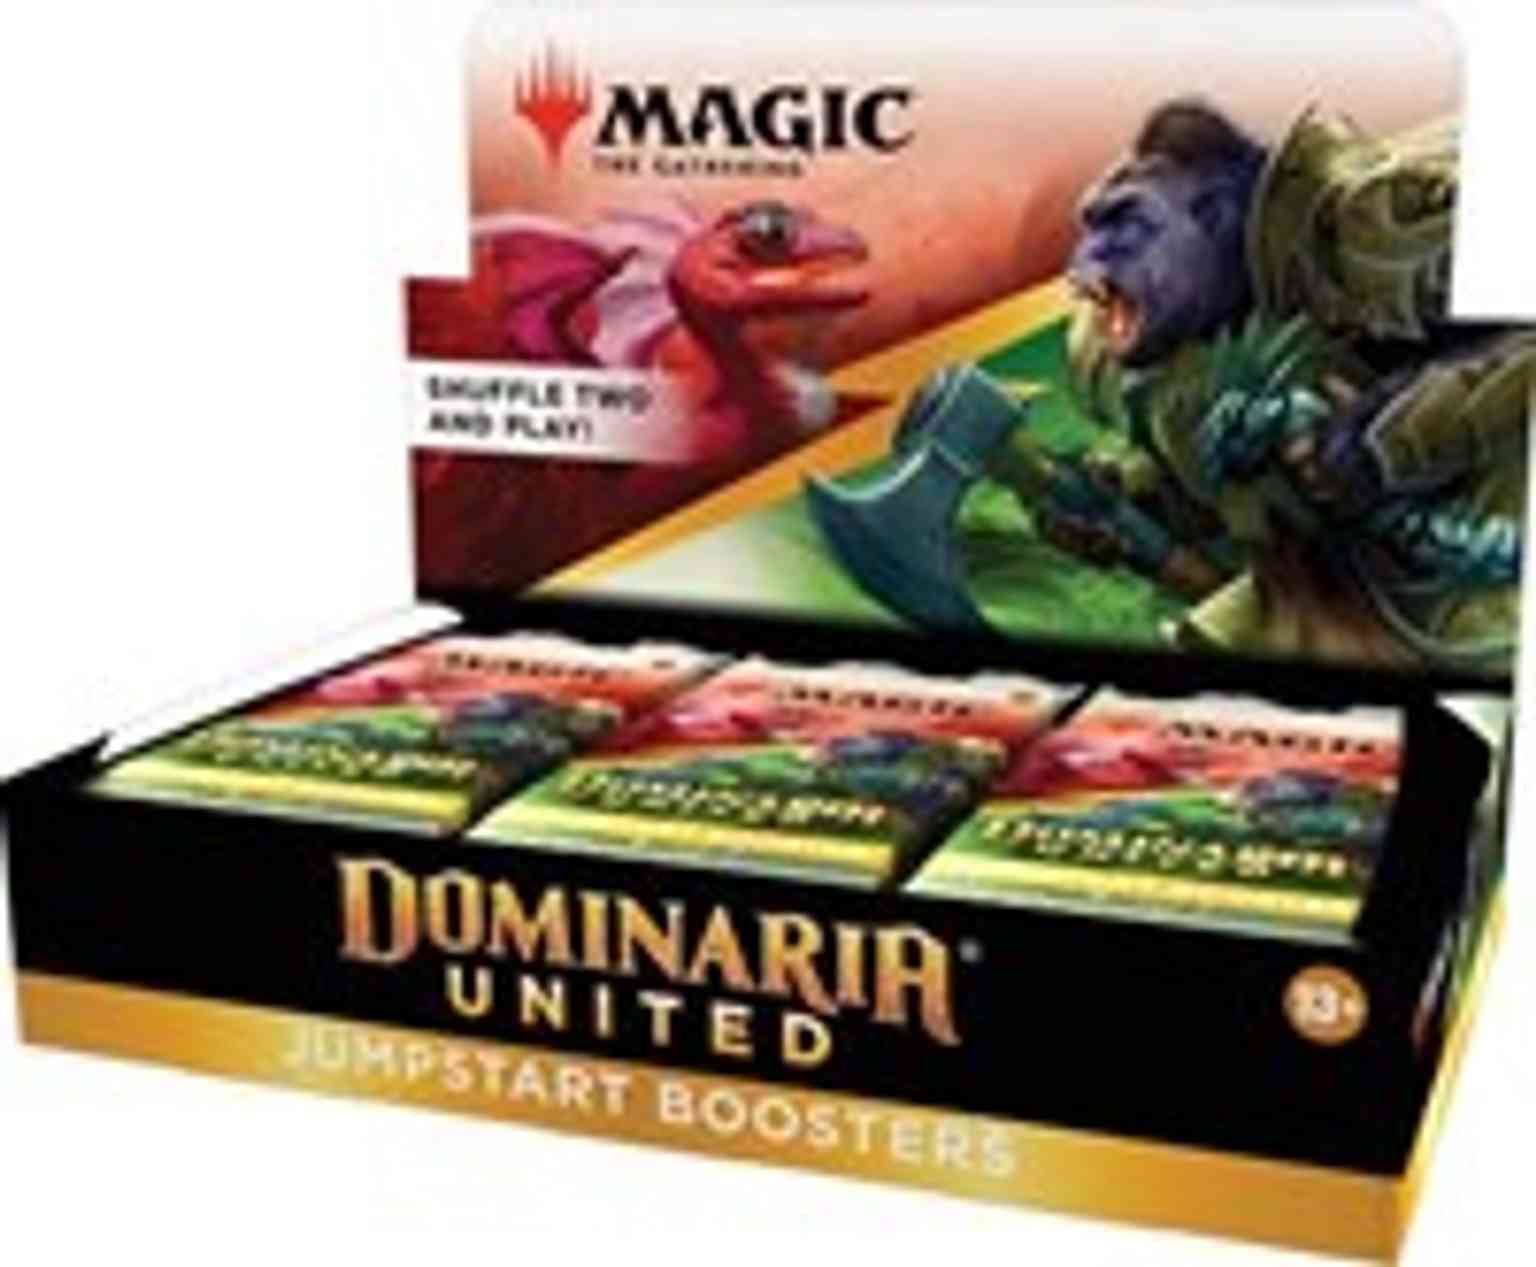 Dominaria United - Jumpstart Booster Display magic card front